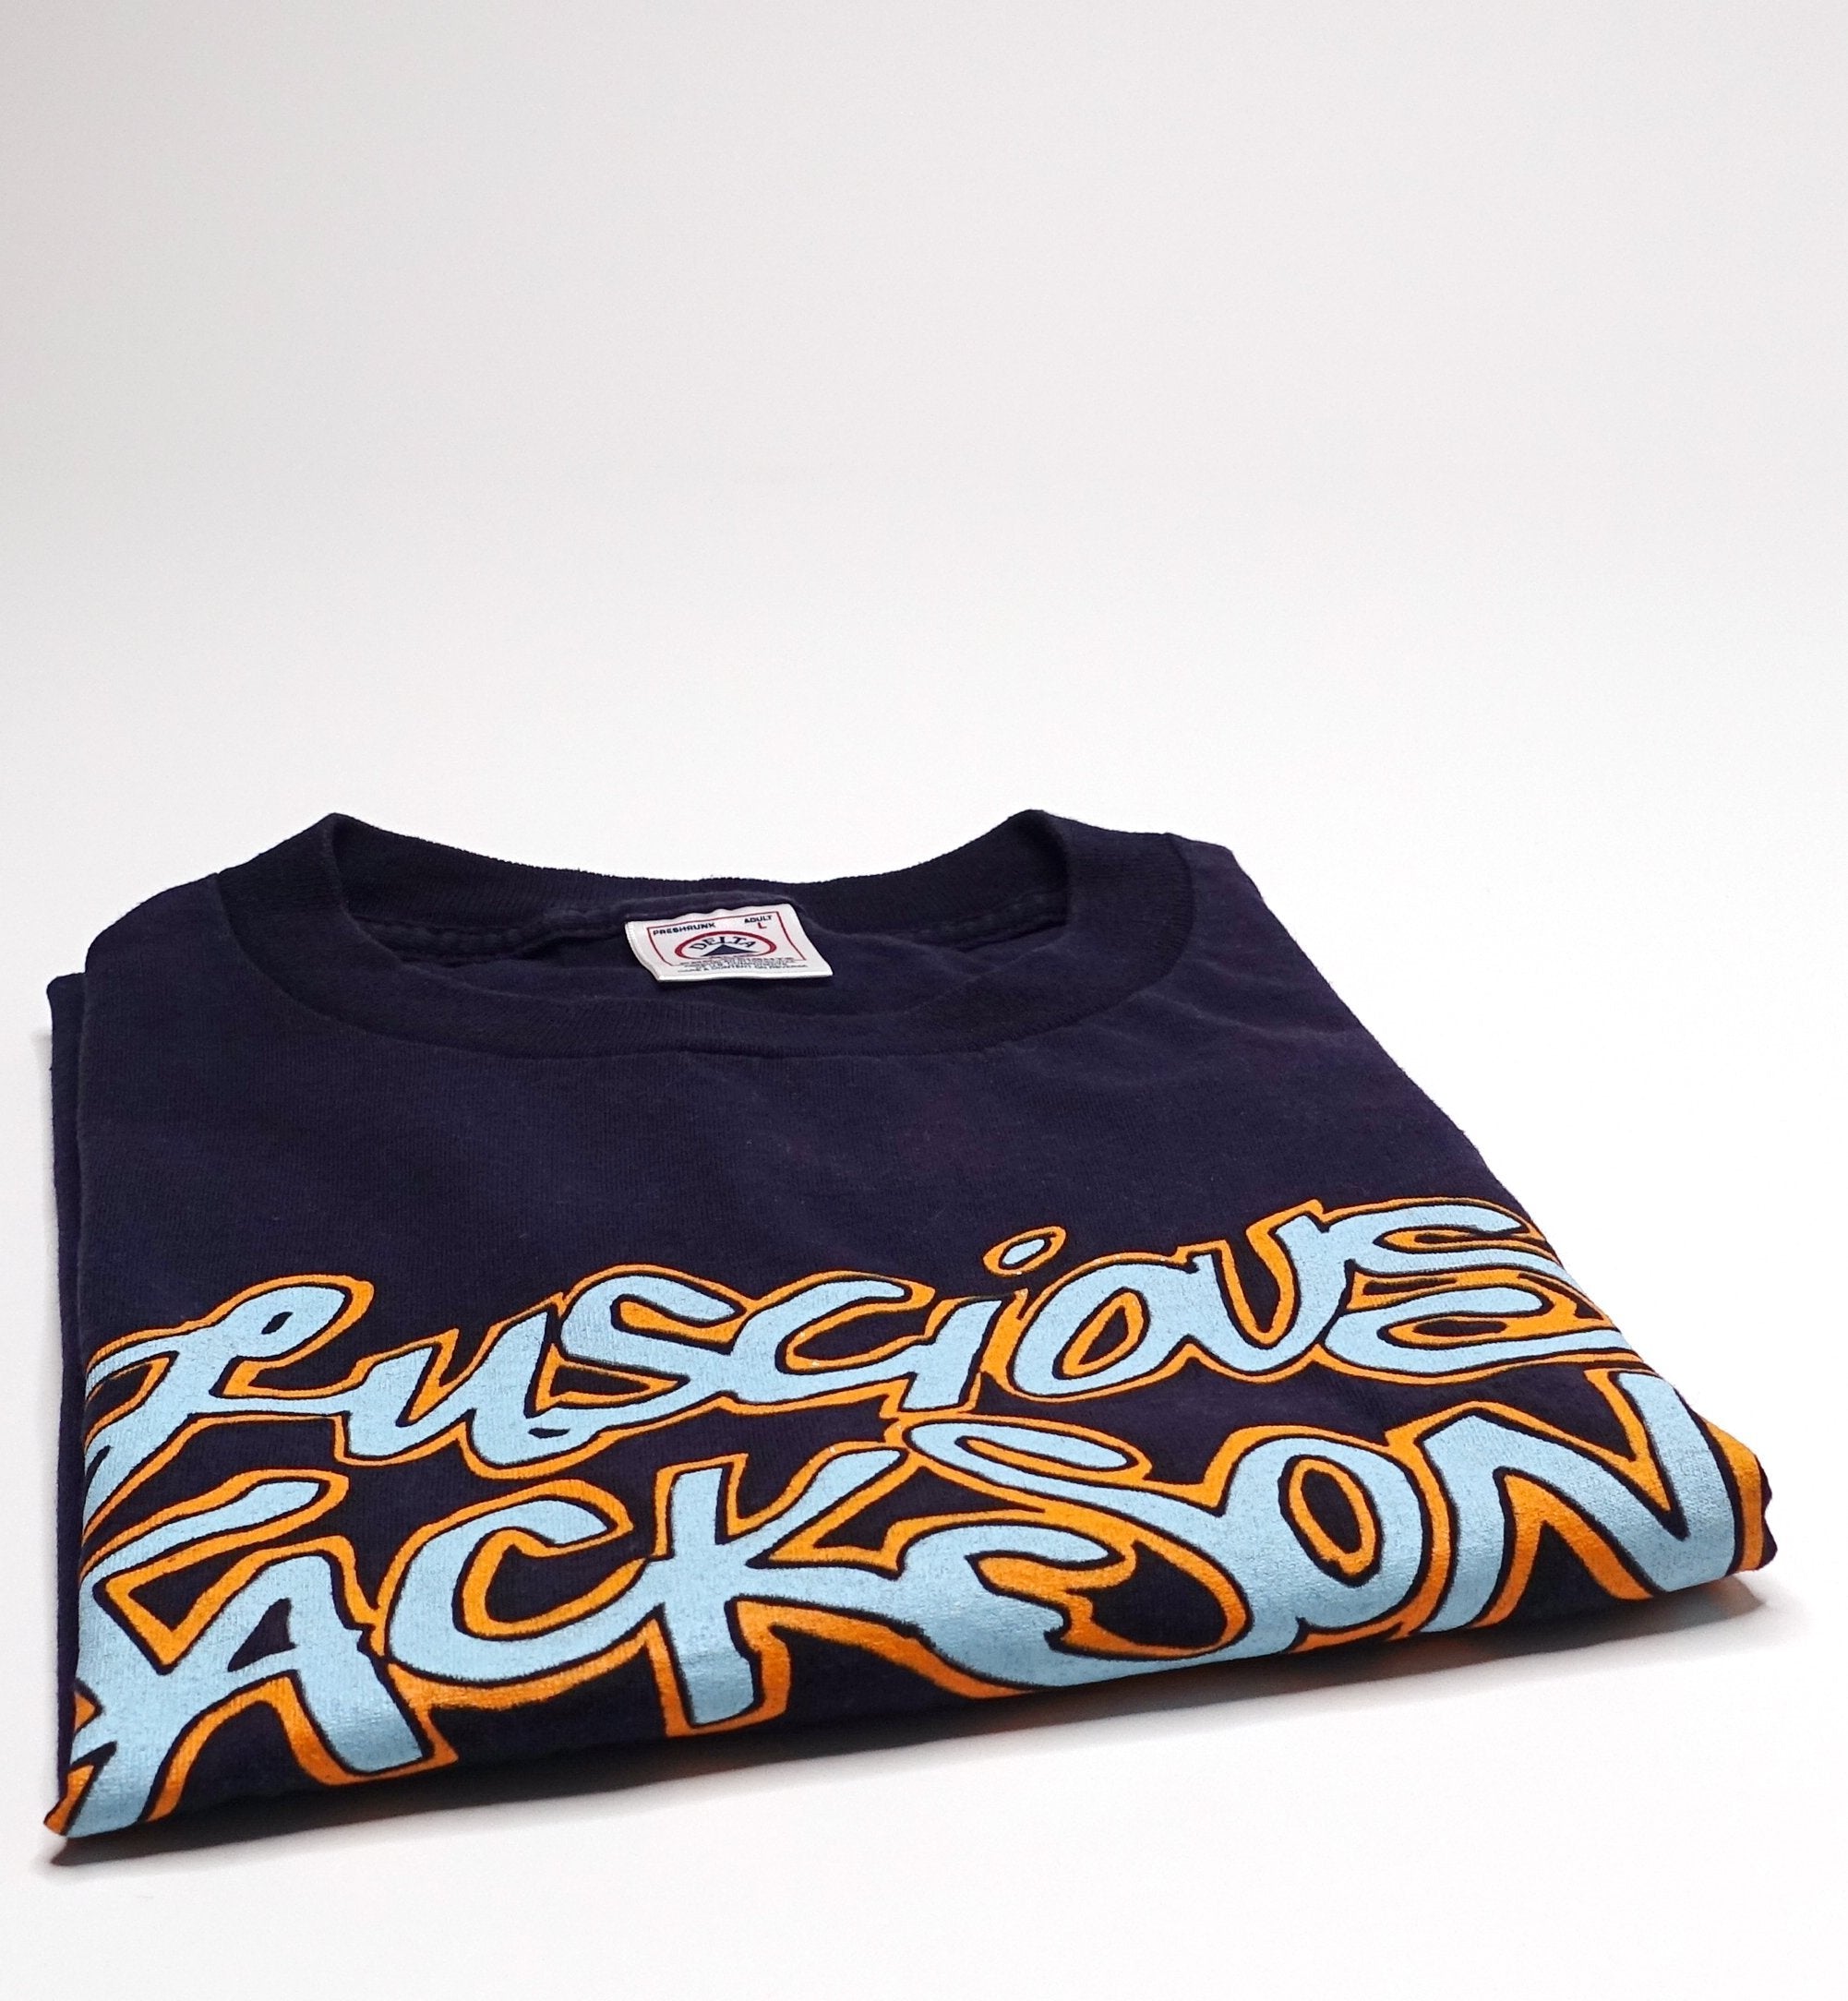 Luscious Jackson -  Logo 1995 Tour Shirt Size Large